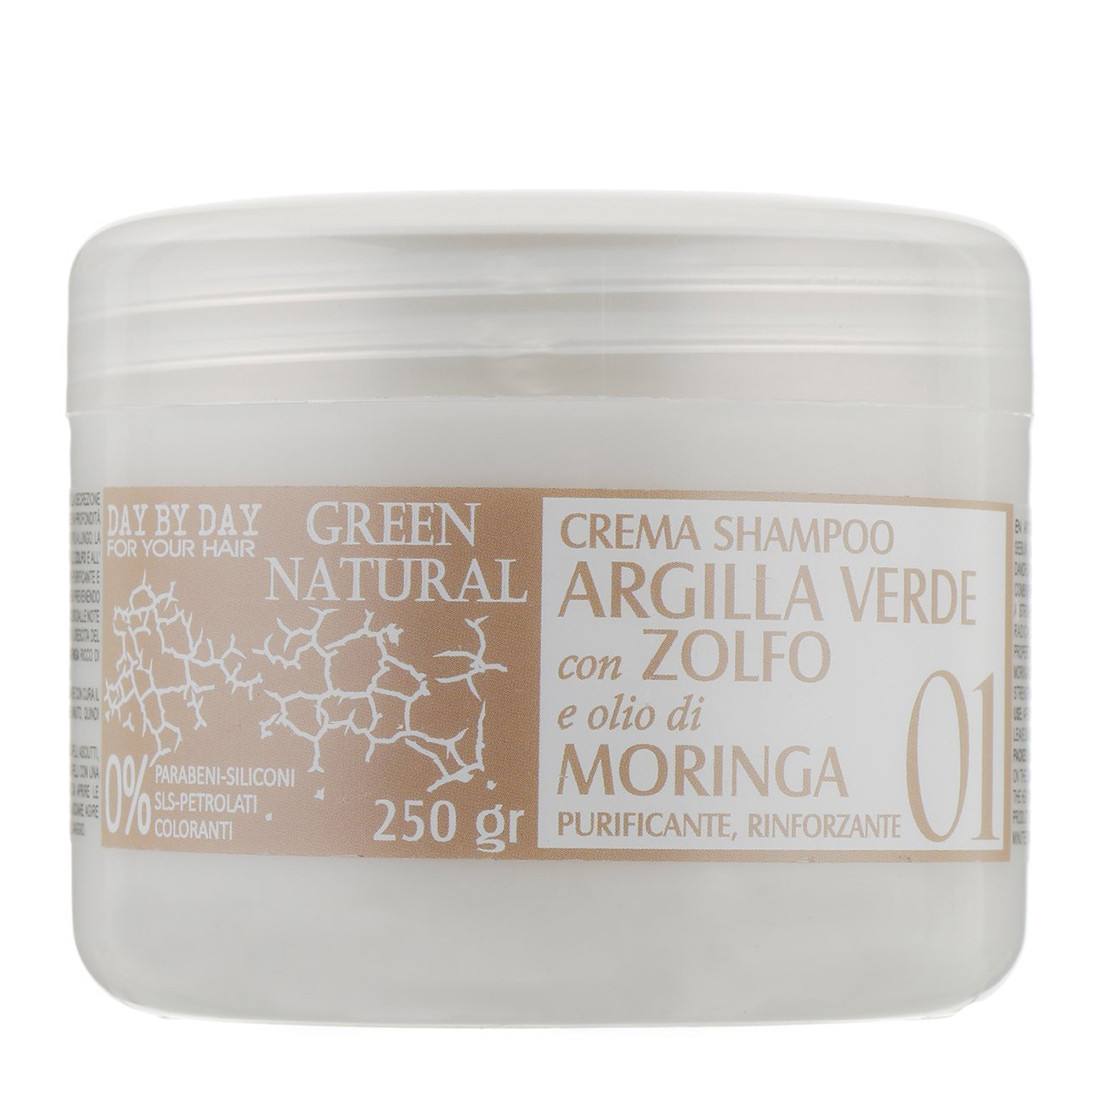 Alan Jey Green Natural Crema Shampoo Argilla Verde Con Zolfo E Olio Di Moringa Крем-шампунь с зеленой глиной, цинком и маслом моринги